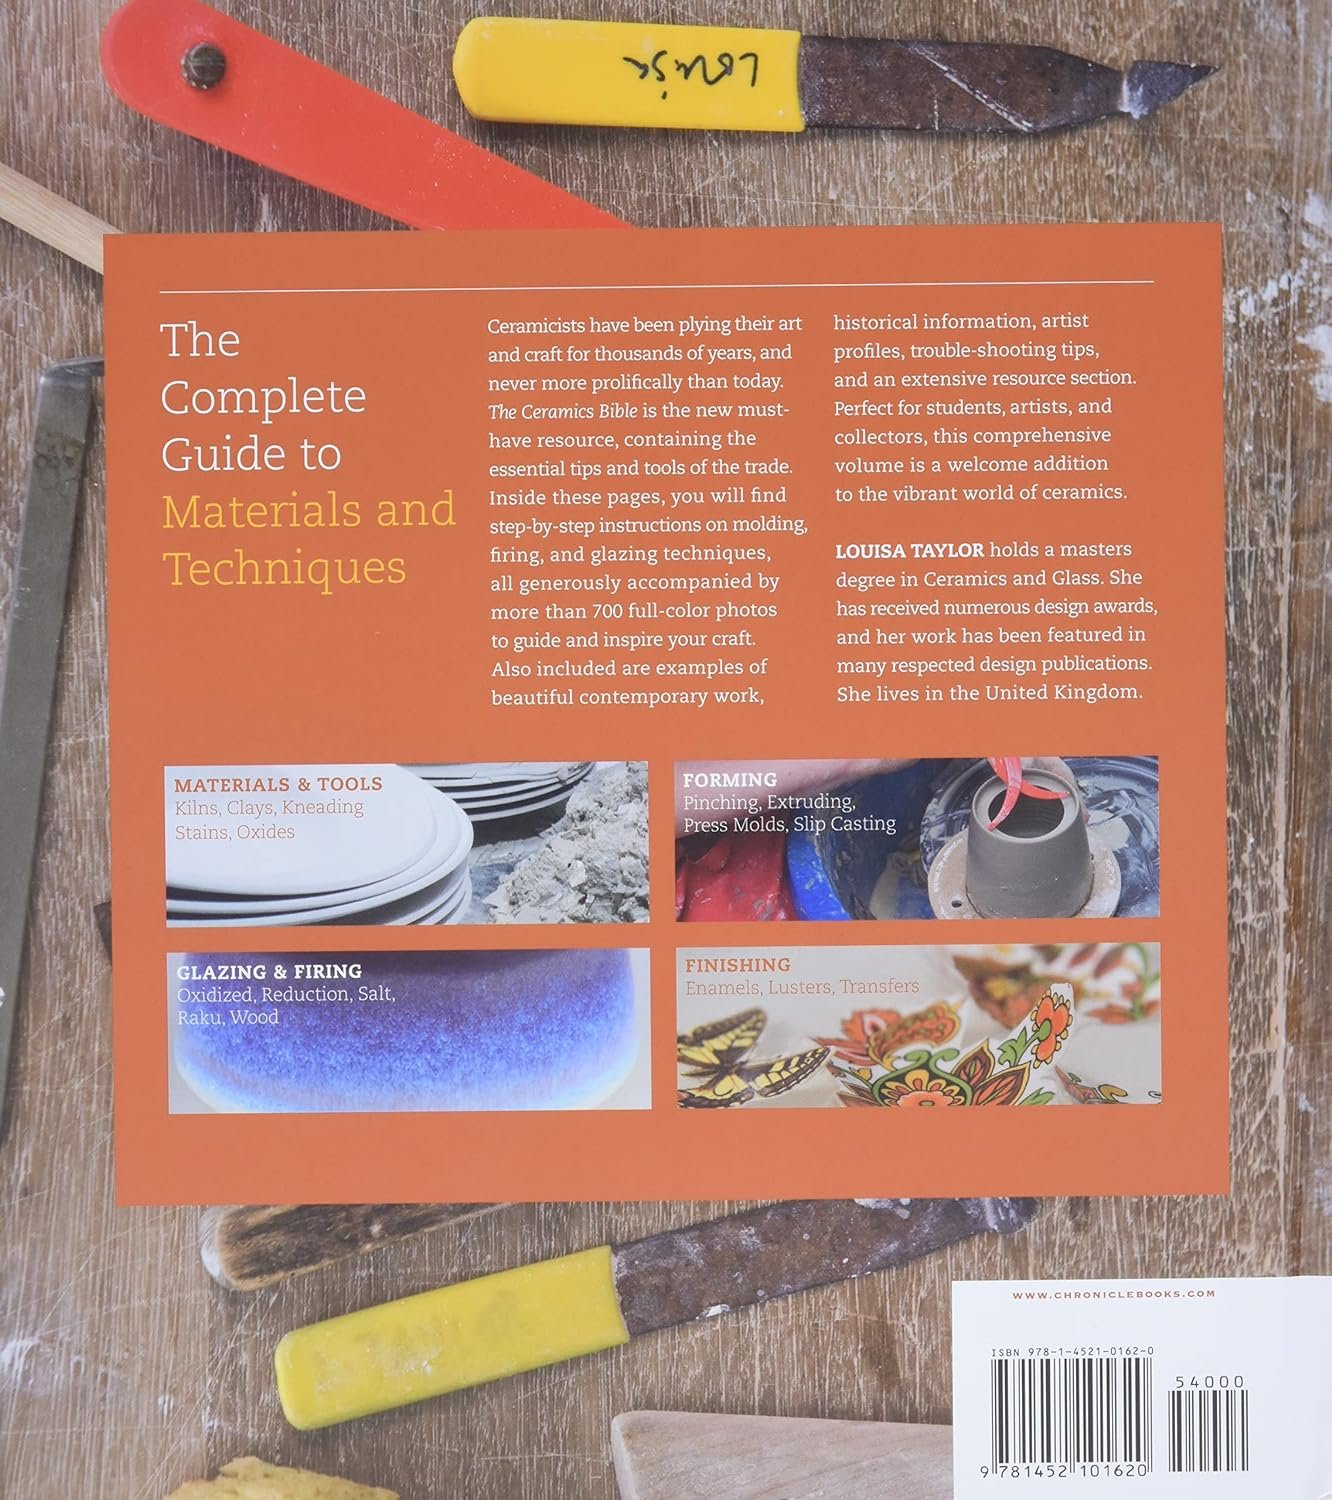 The Ceramics Bible: The Complete Guide to Materials and Techniques (Ceramics Book, Ceramics Tools Book, Ceramics Kit Book)